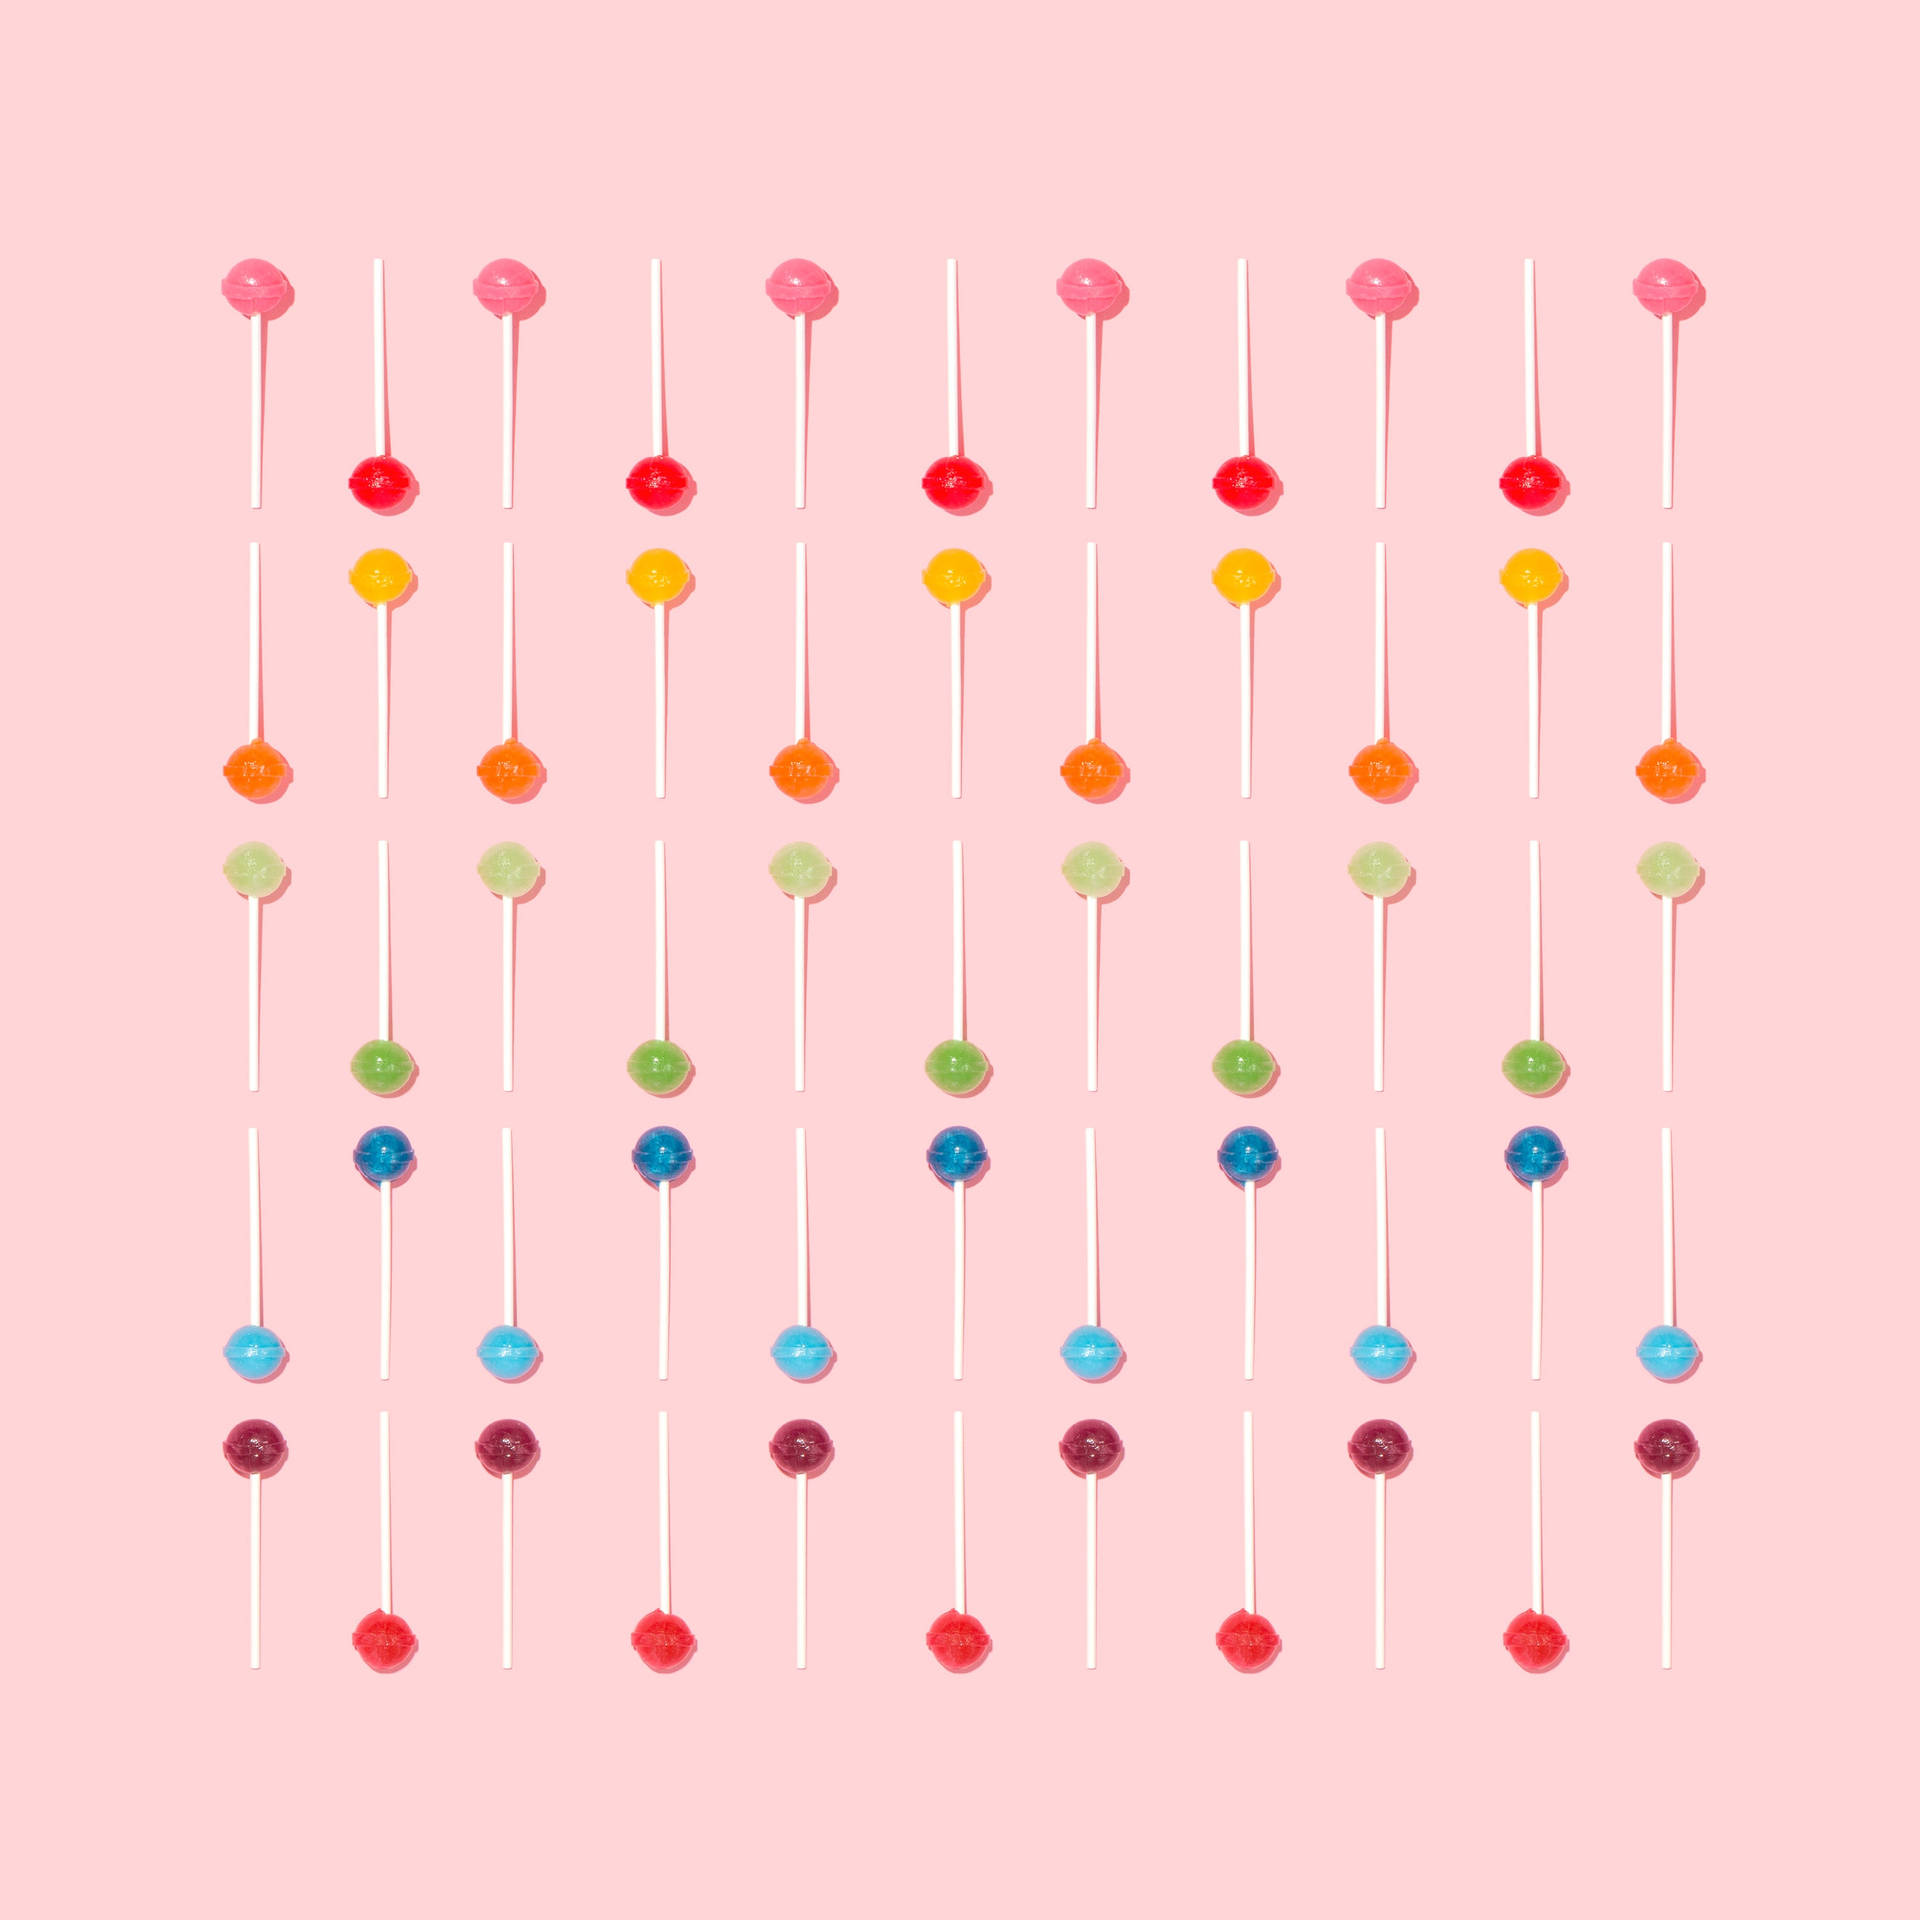 Caption: Vibrant Lollipop Aesthetic Pattern